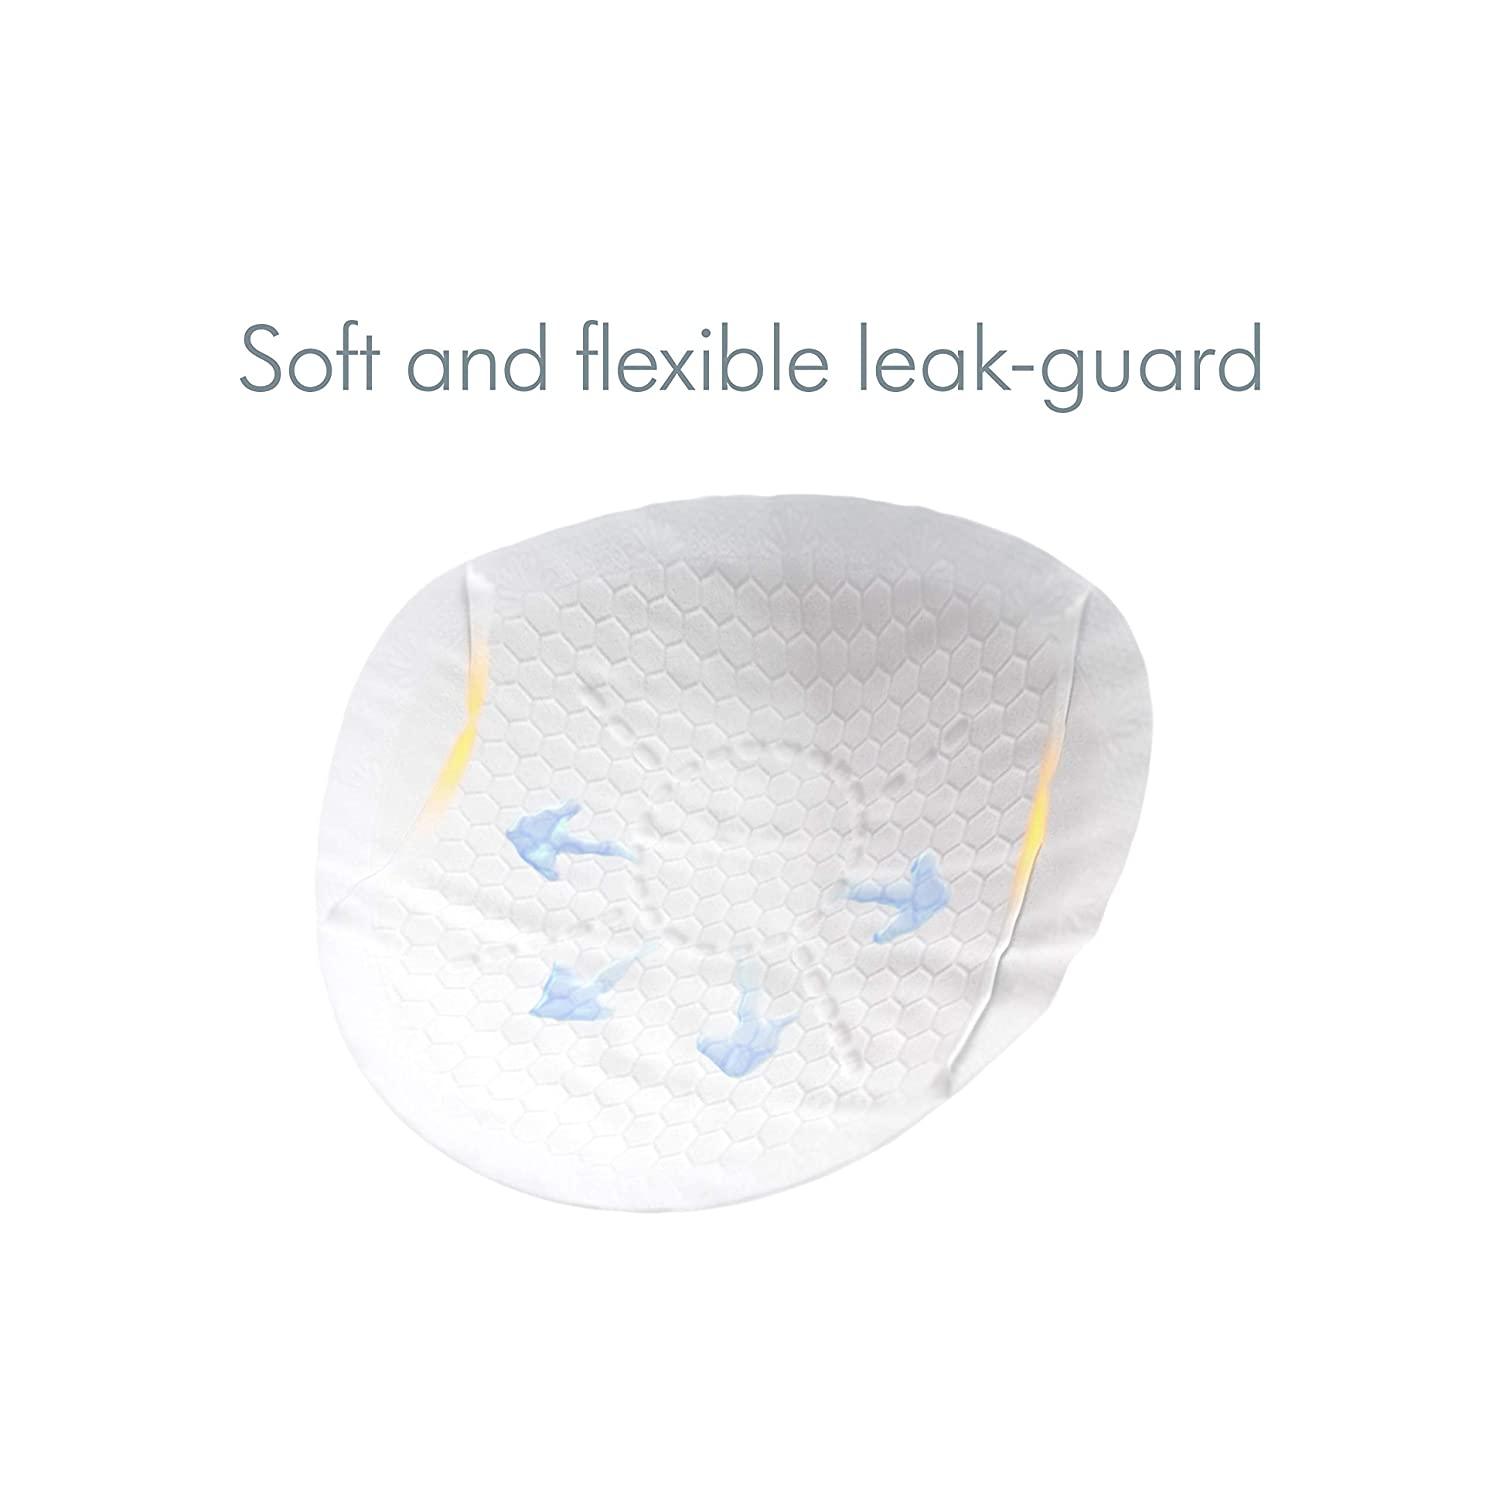 Medela Safe & Dry Ultra Thin Disposable Bra Pad